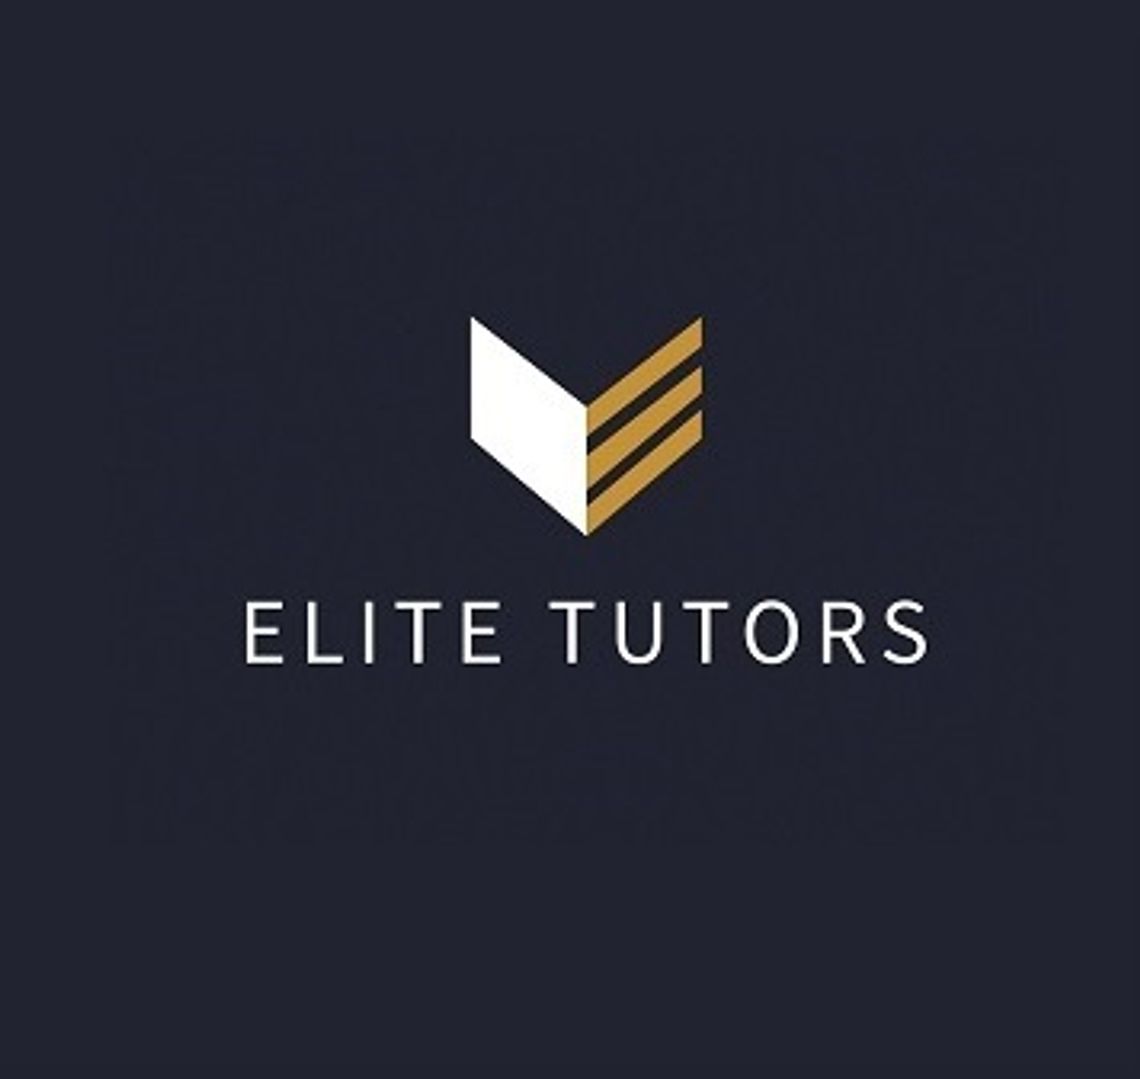 Elite Tutors Sussex Limited